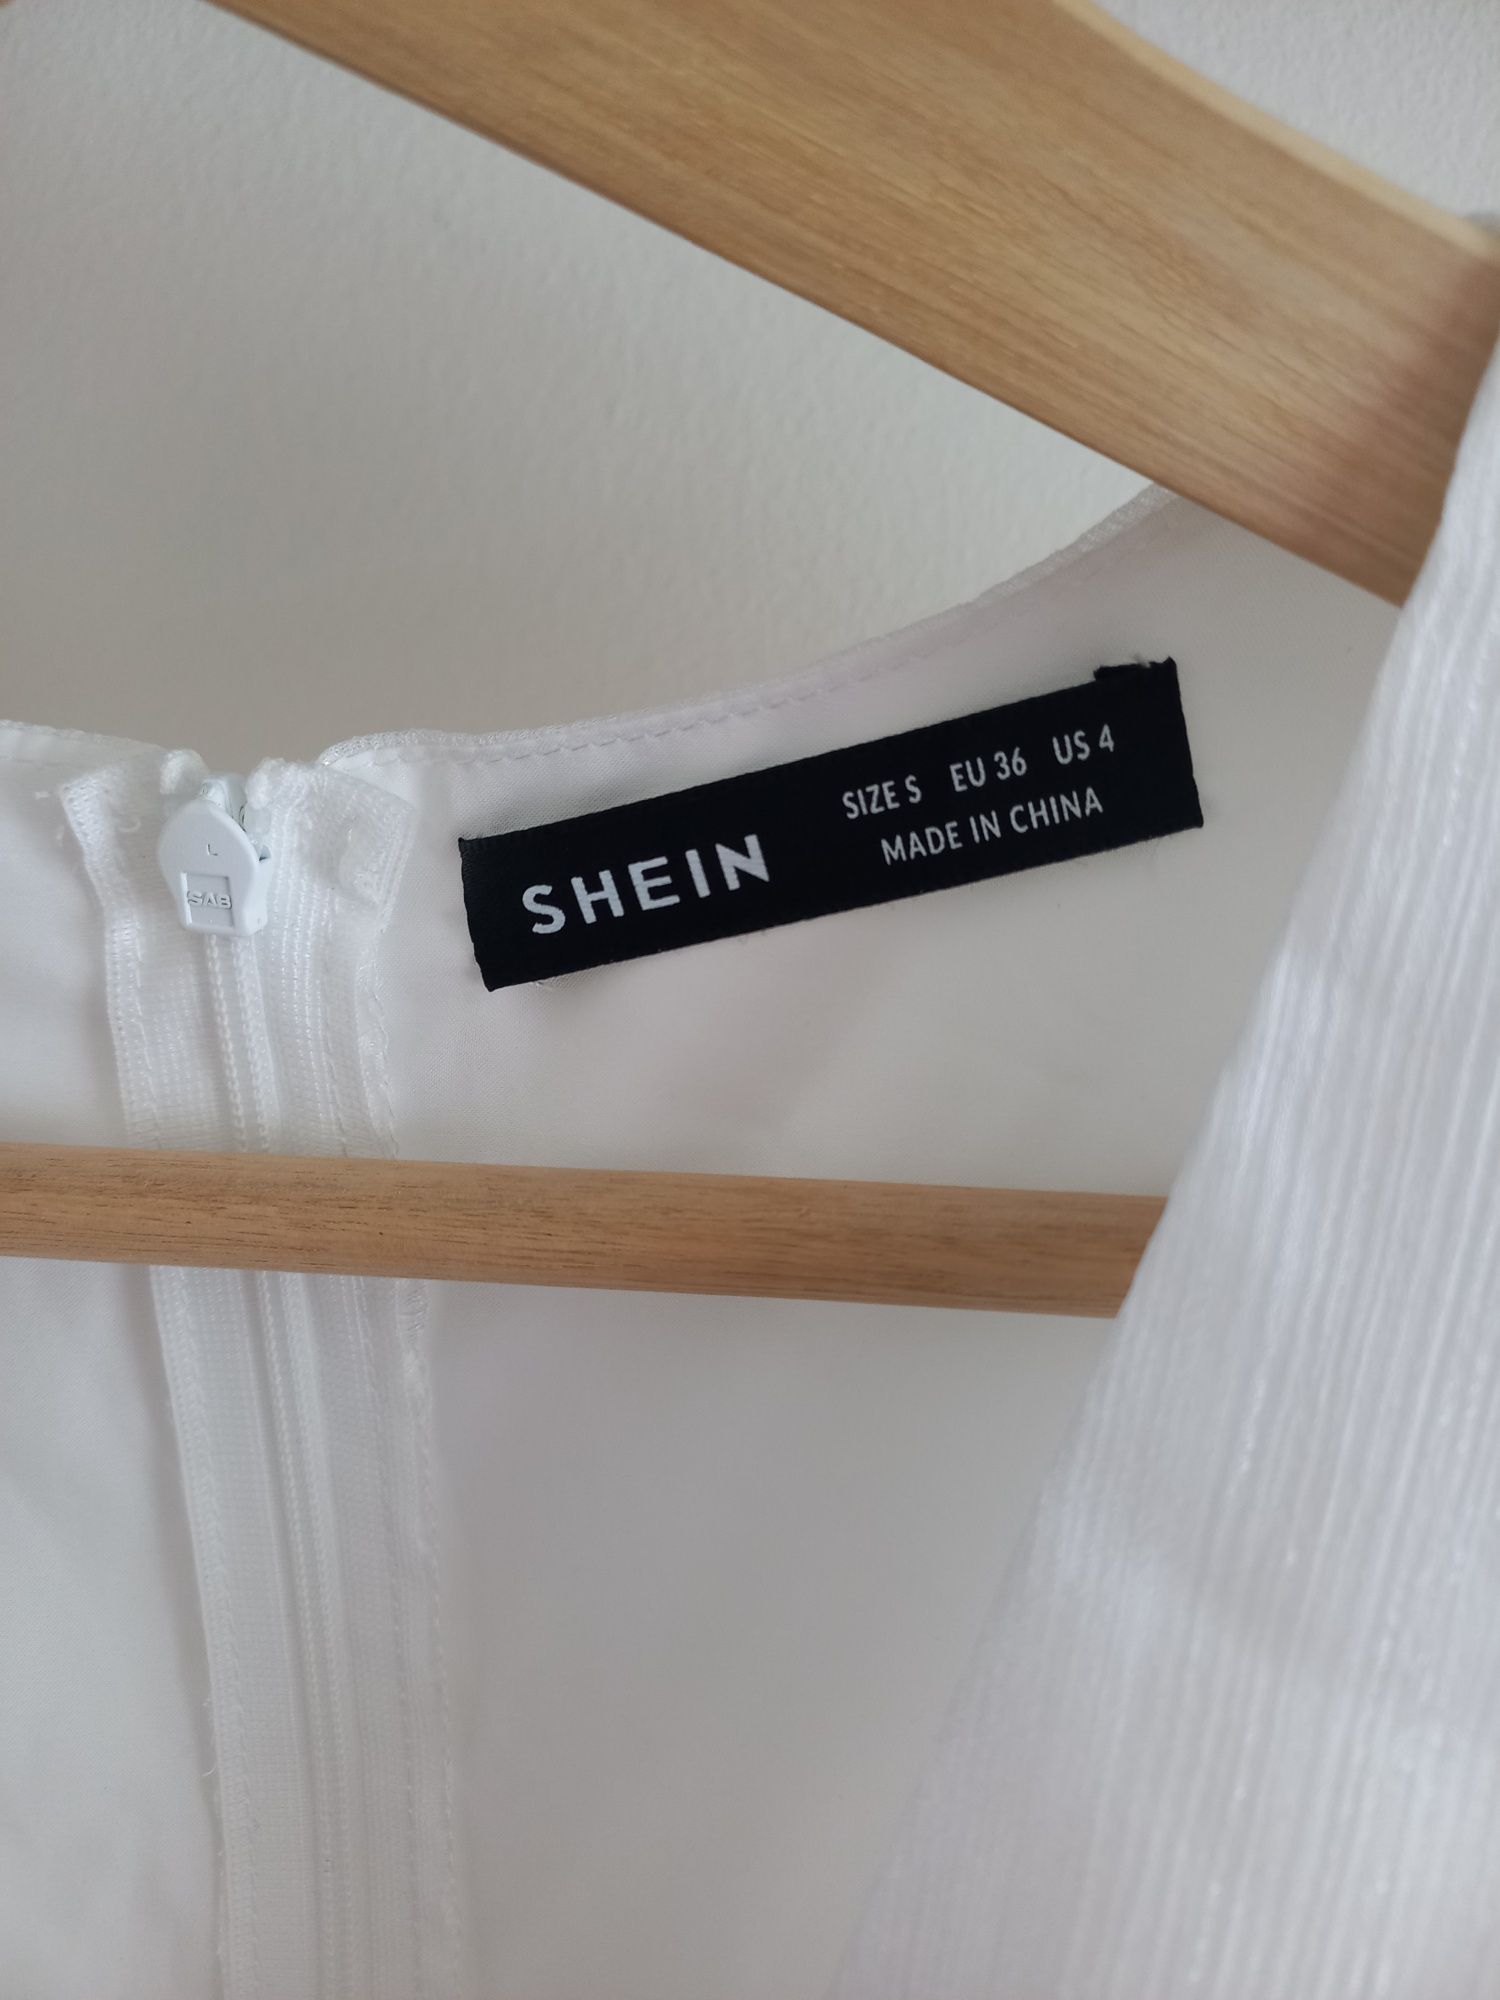 Vestido branco - tam S - Shein (NOVO)

Completamente novo, nunca usado